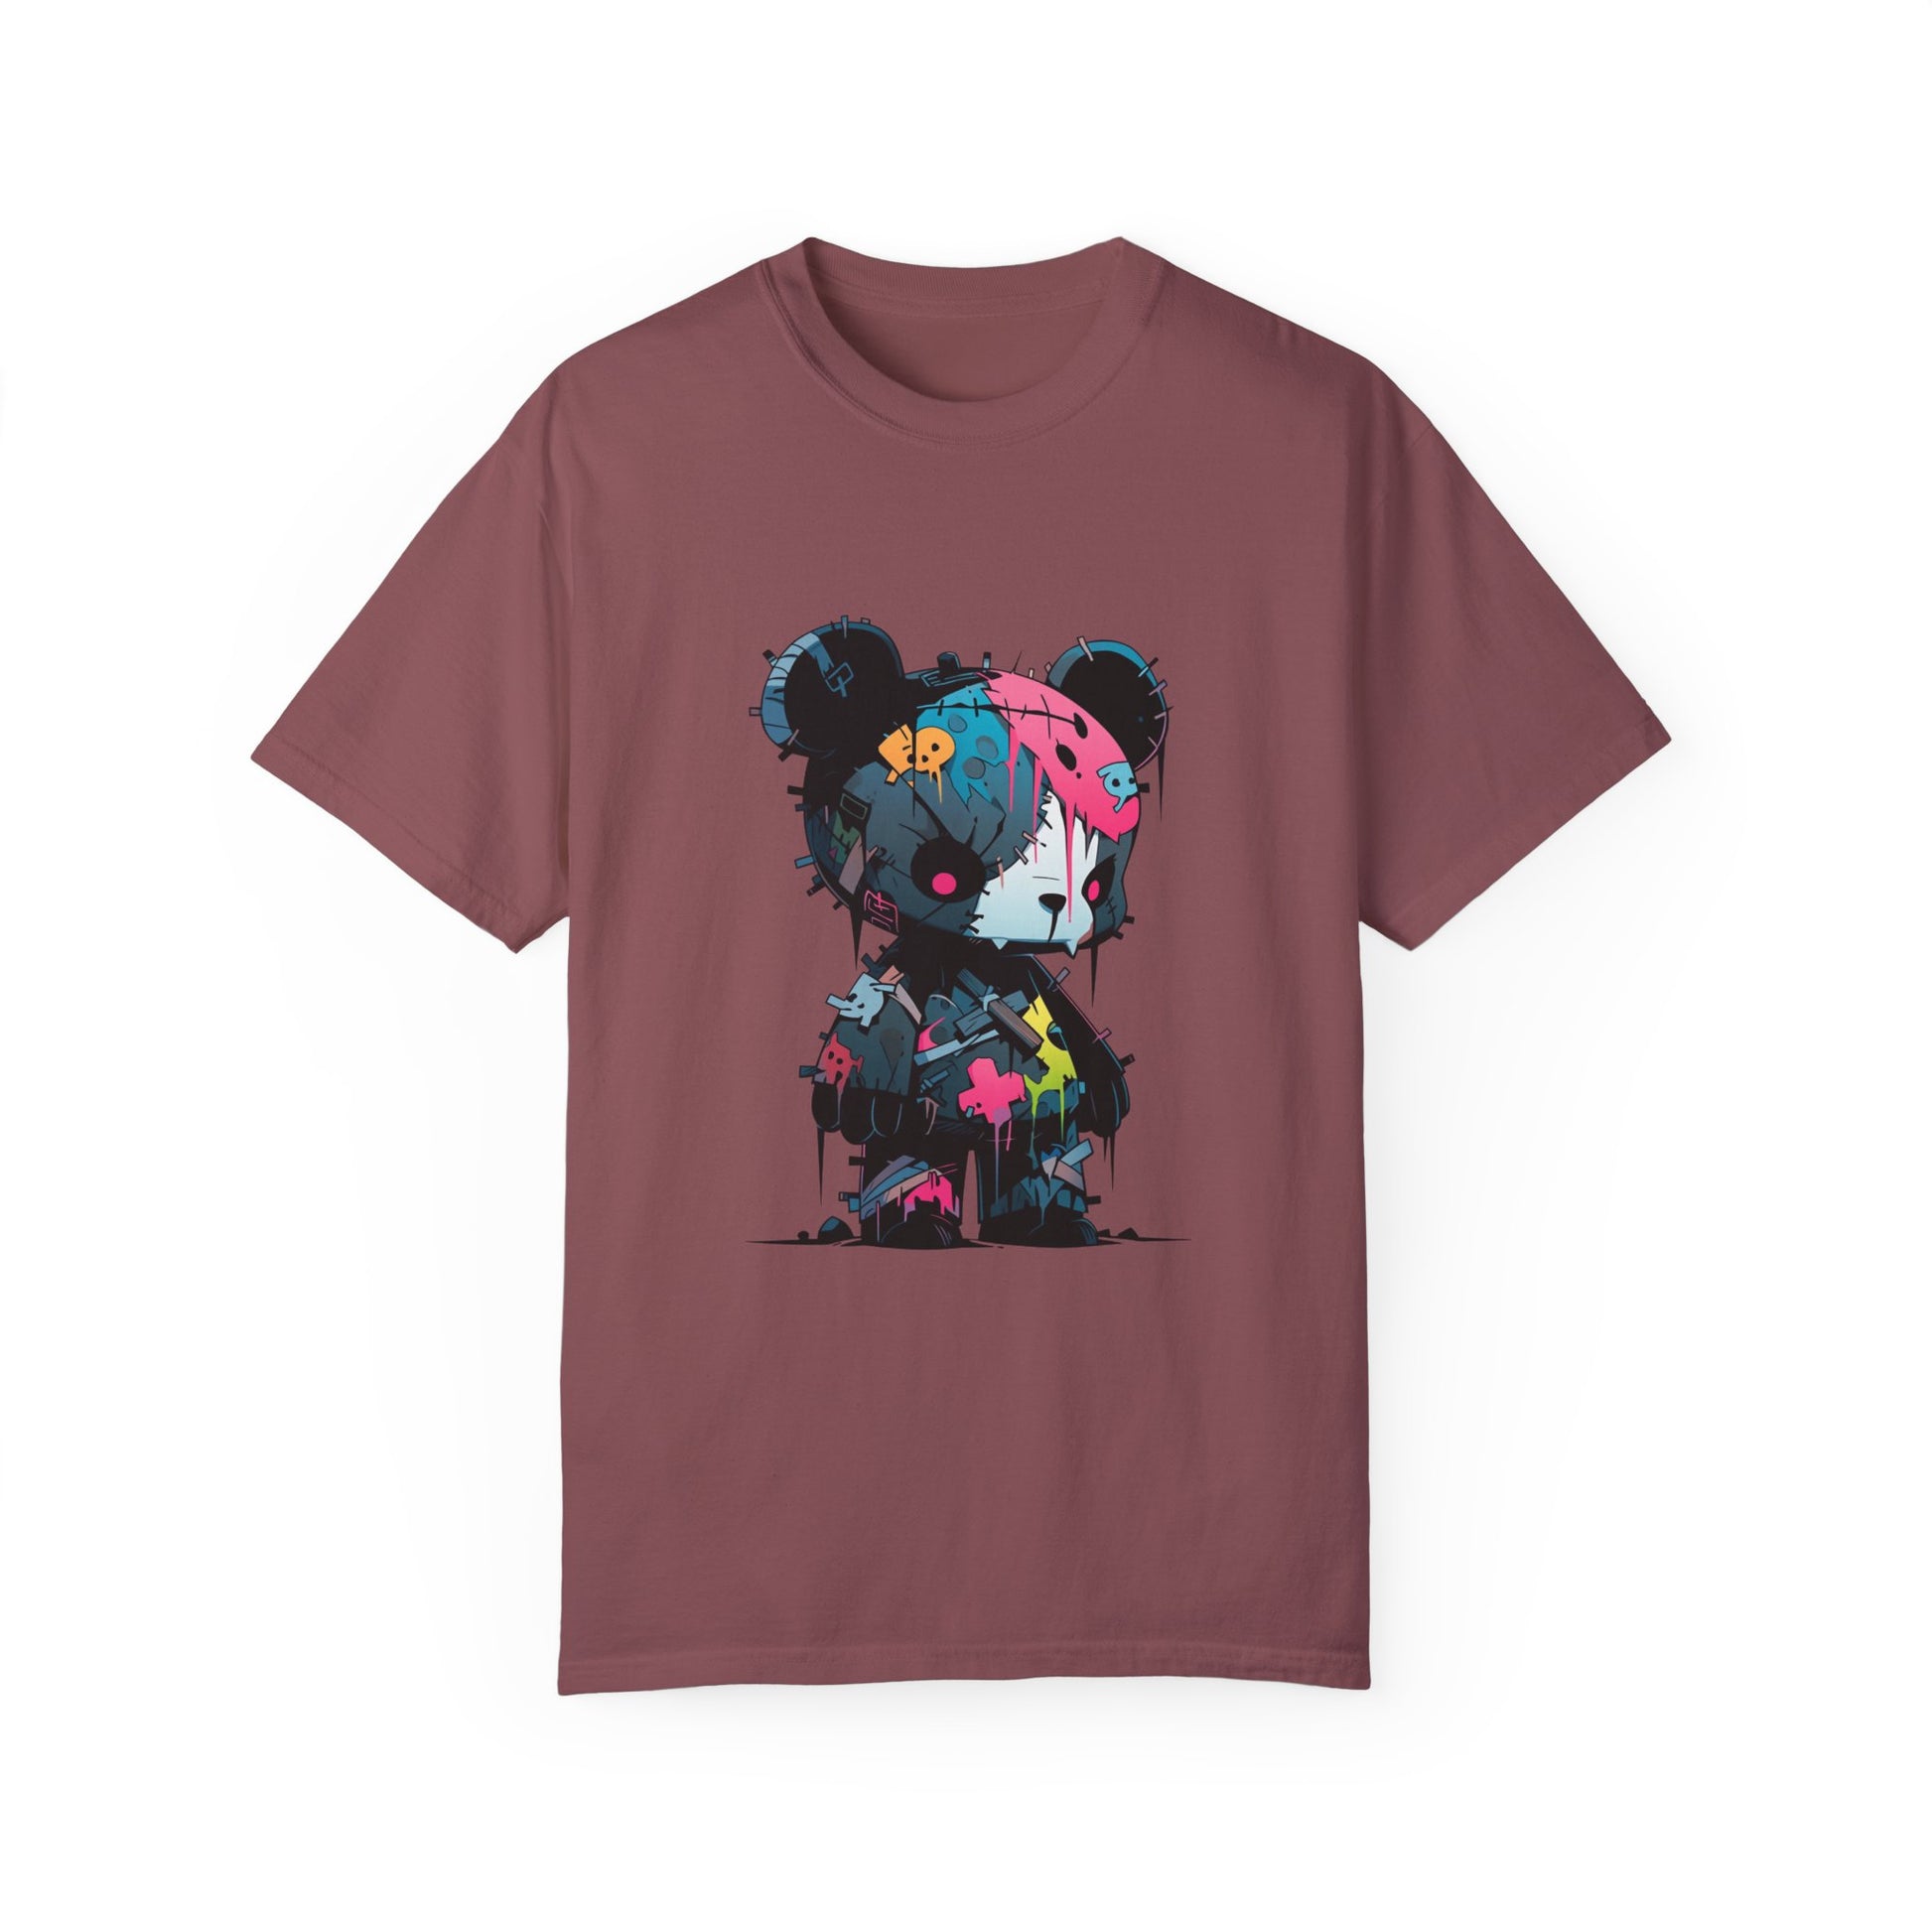 Hip Hop Teddy Bear Graphic Unisex Garment-dyed T-shirt Cotton Funny Humorous Graphic Soft Premium Unisex Men Women Brick T-shirt Birthday Gift-5